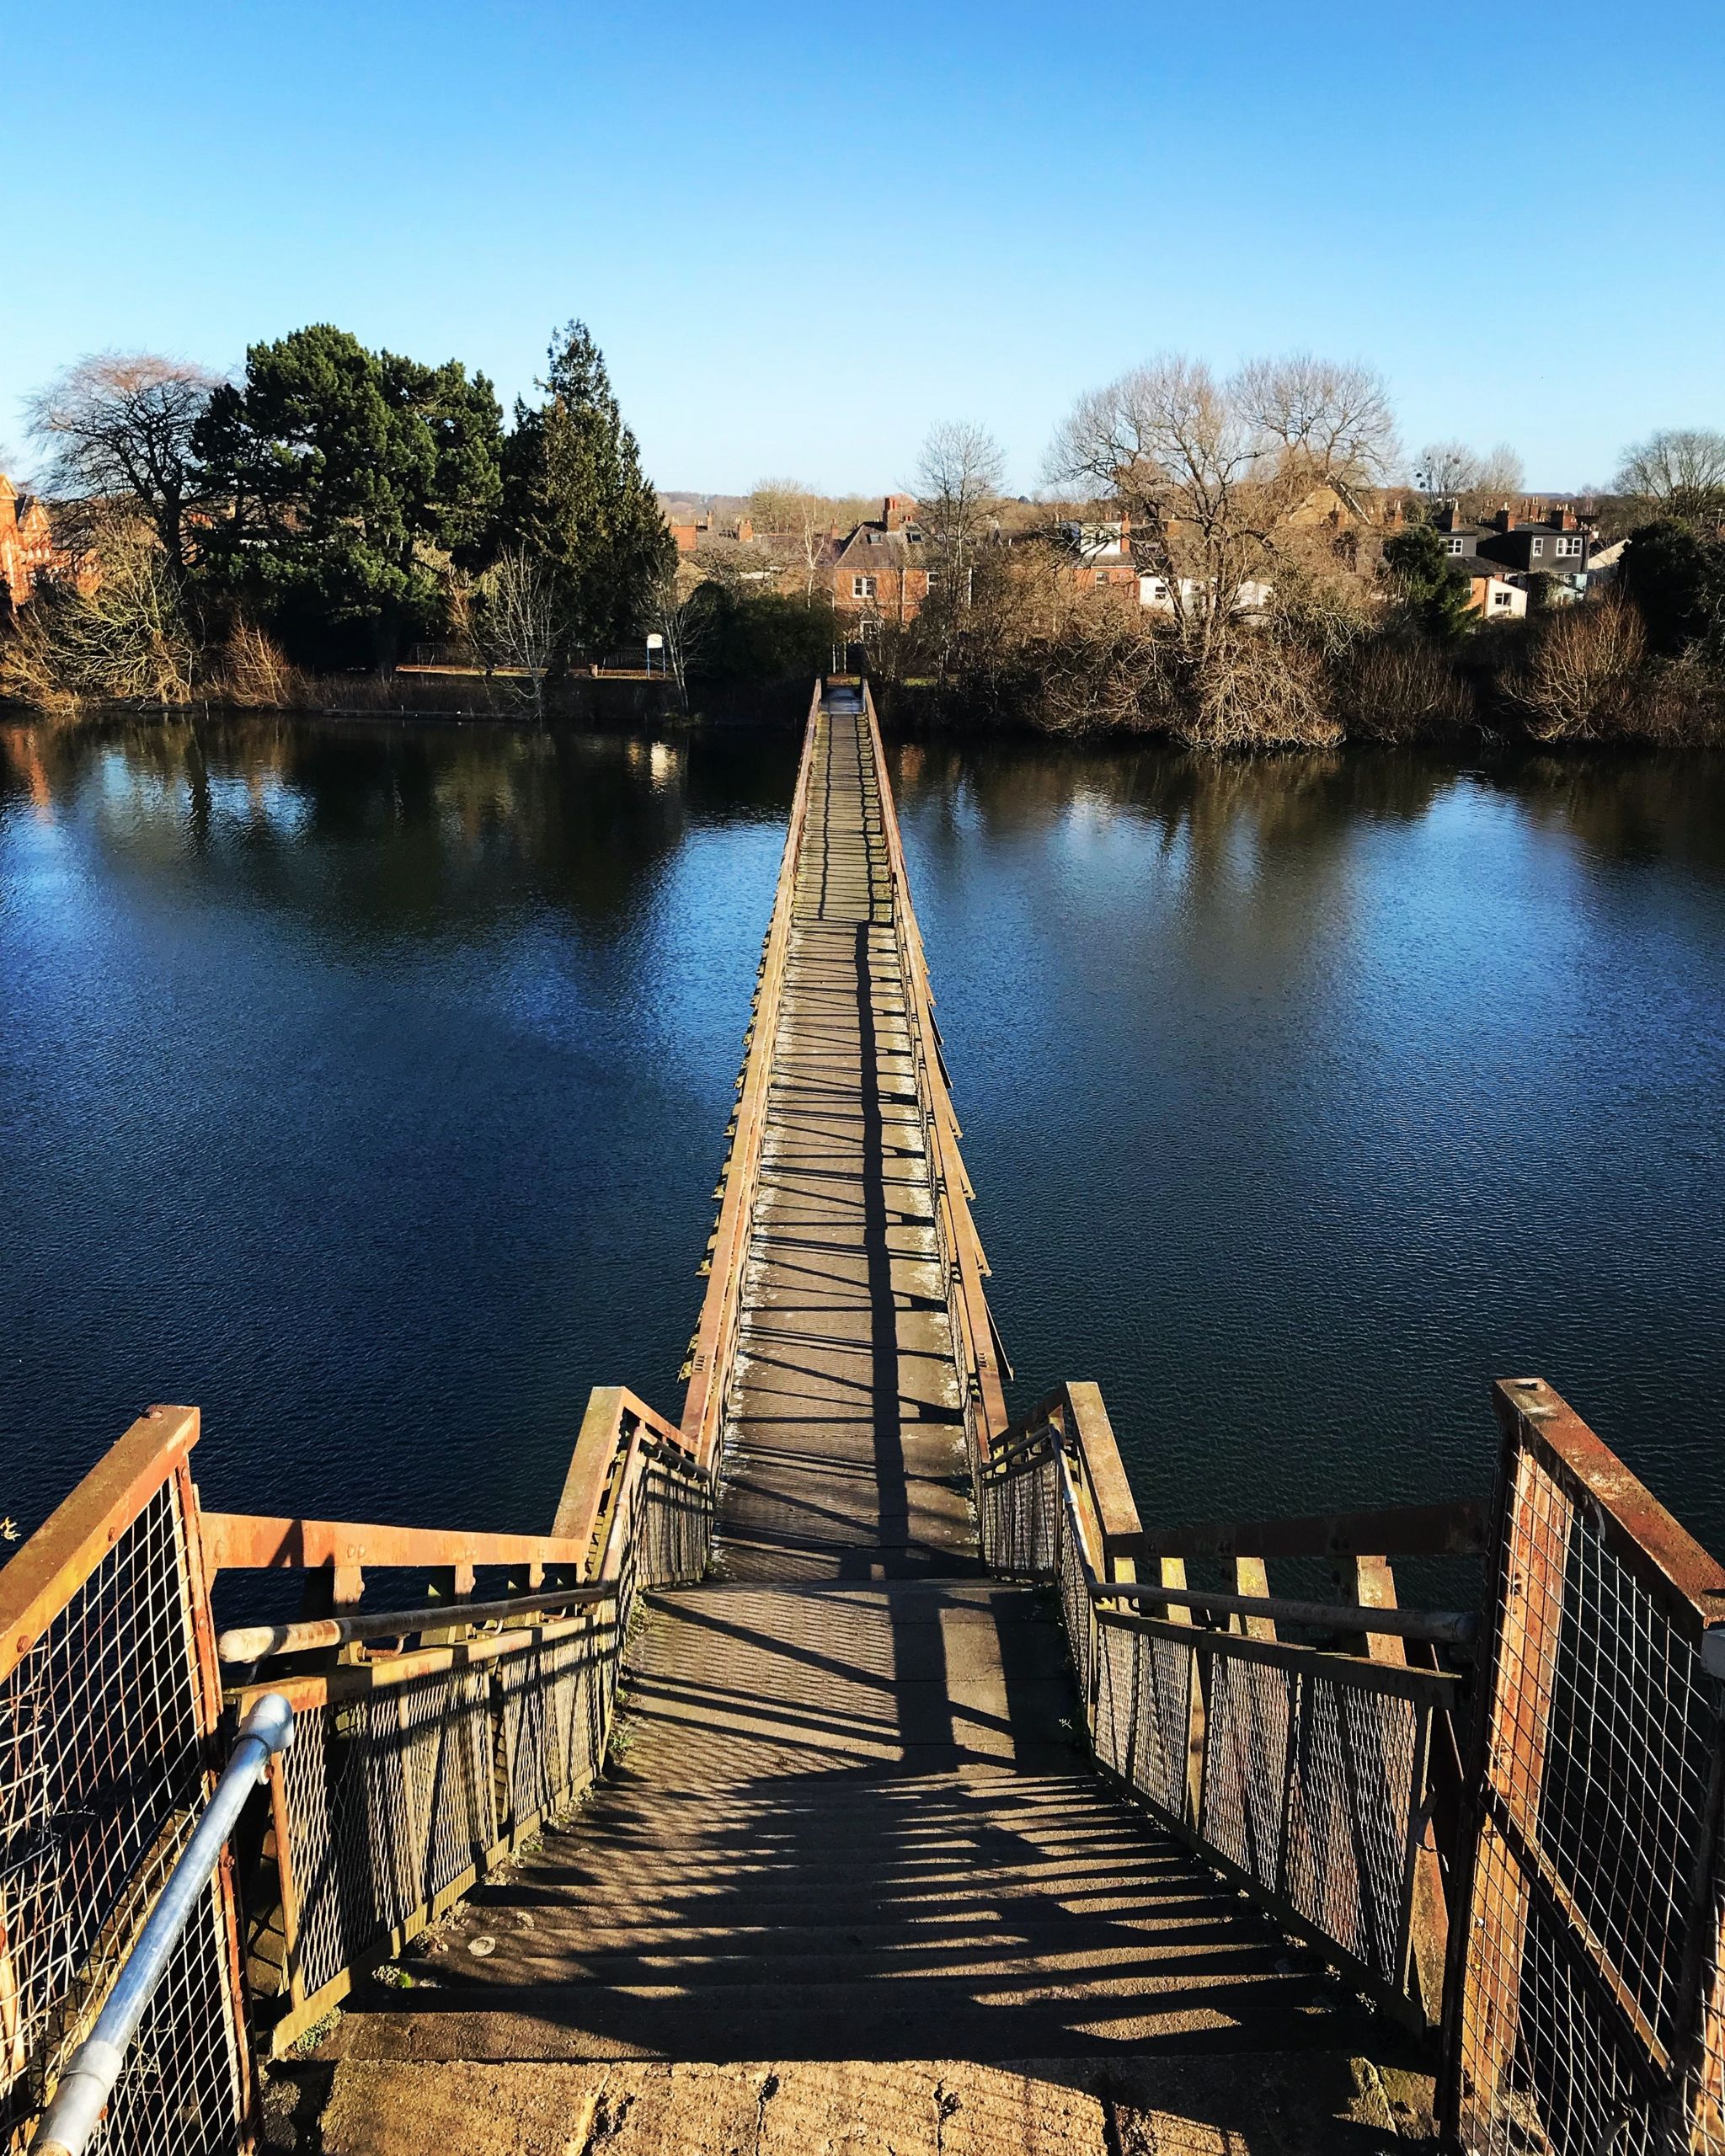 The South Hinksey footbridge, taken by Esther Johnson